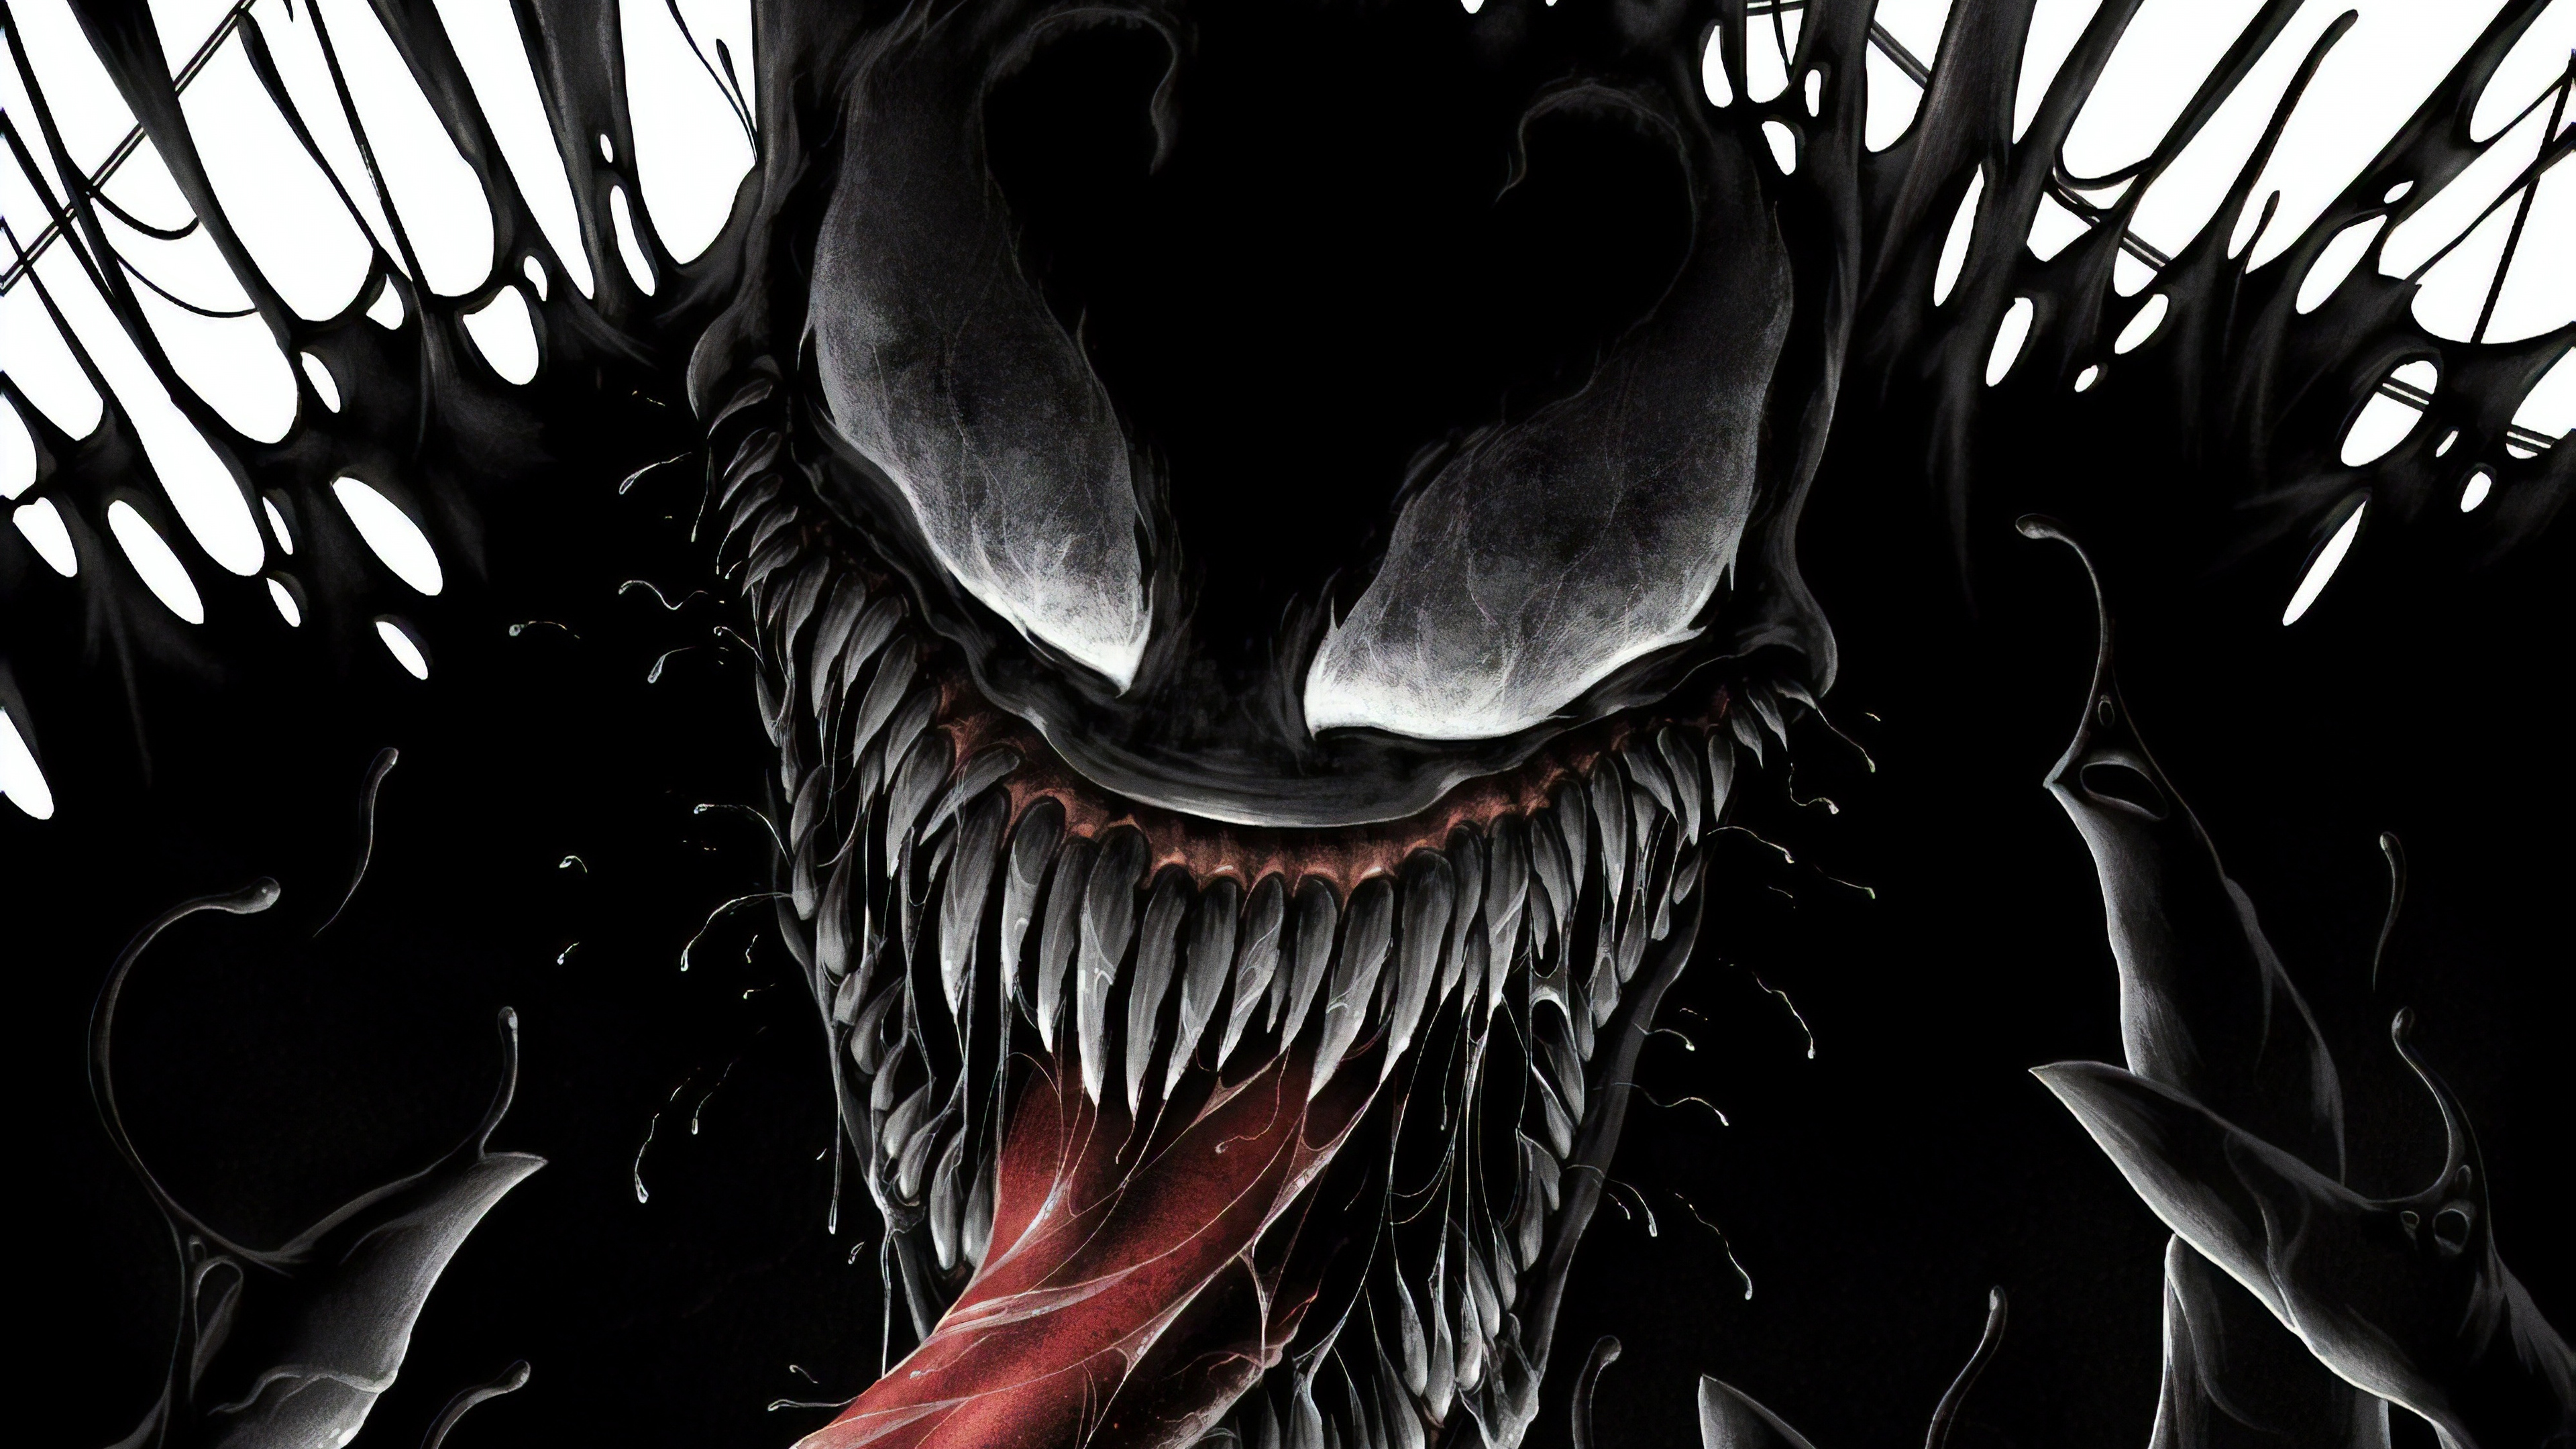 Cool Venom 4K Hd Poster Wallpapers